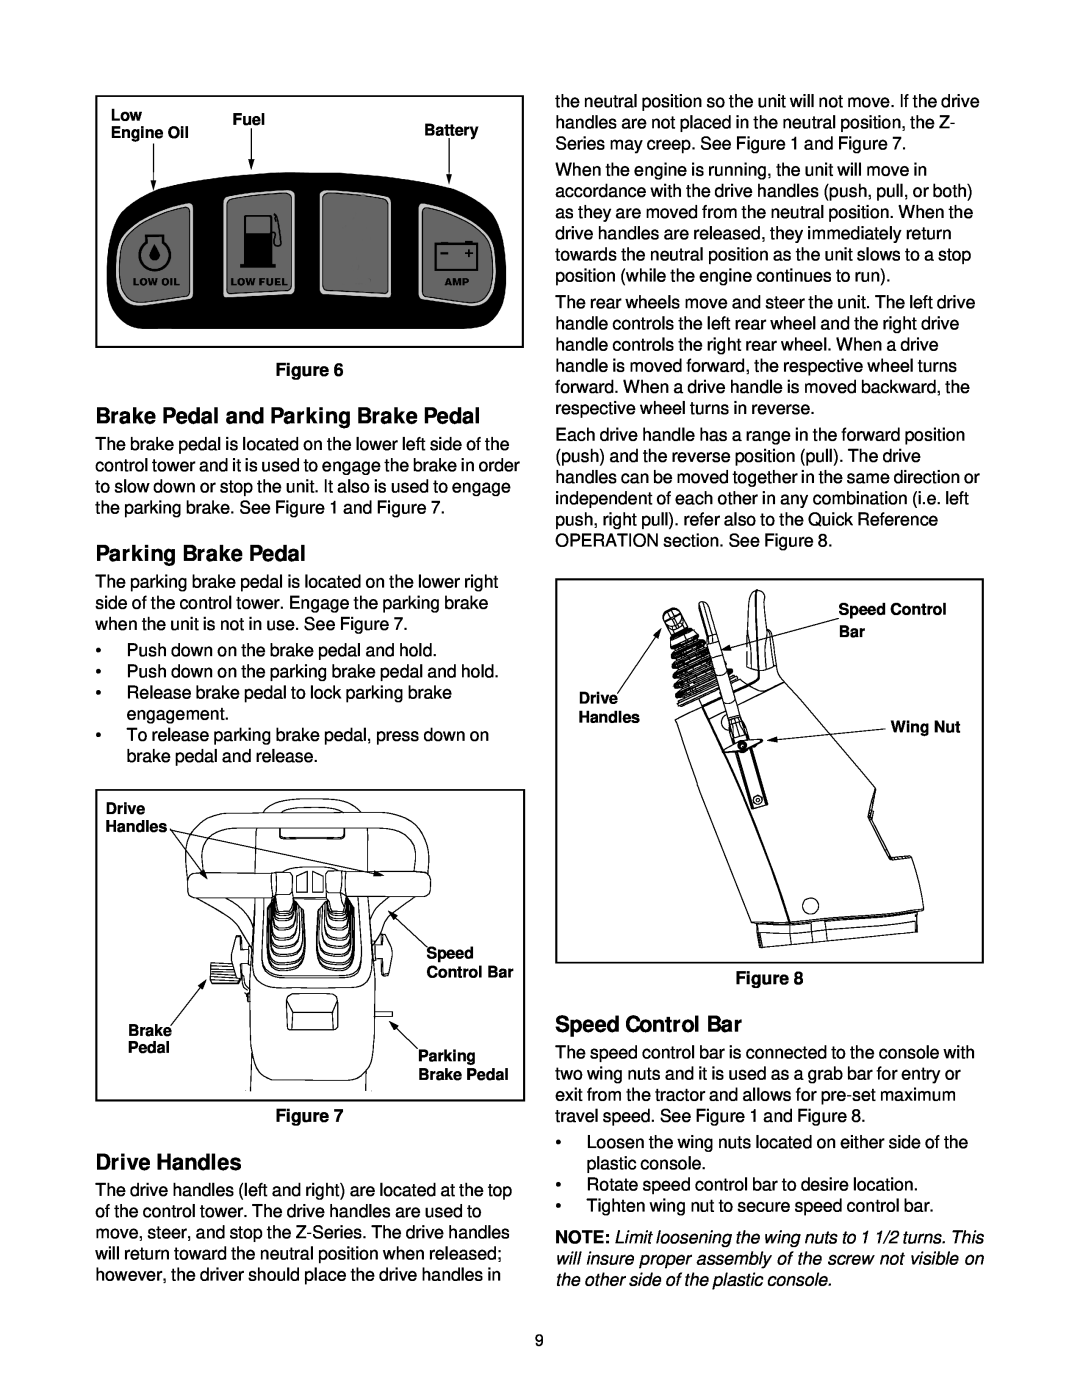 Yard-Man 53AA1A3G401 manual Drive Handles, Speed Control Bar, Brake Pedal and Parking Brake Pedal 